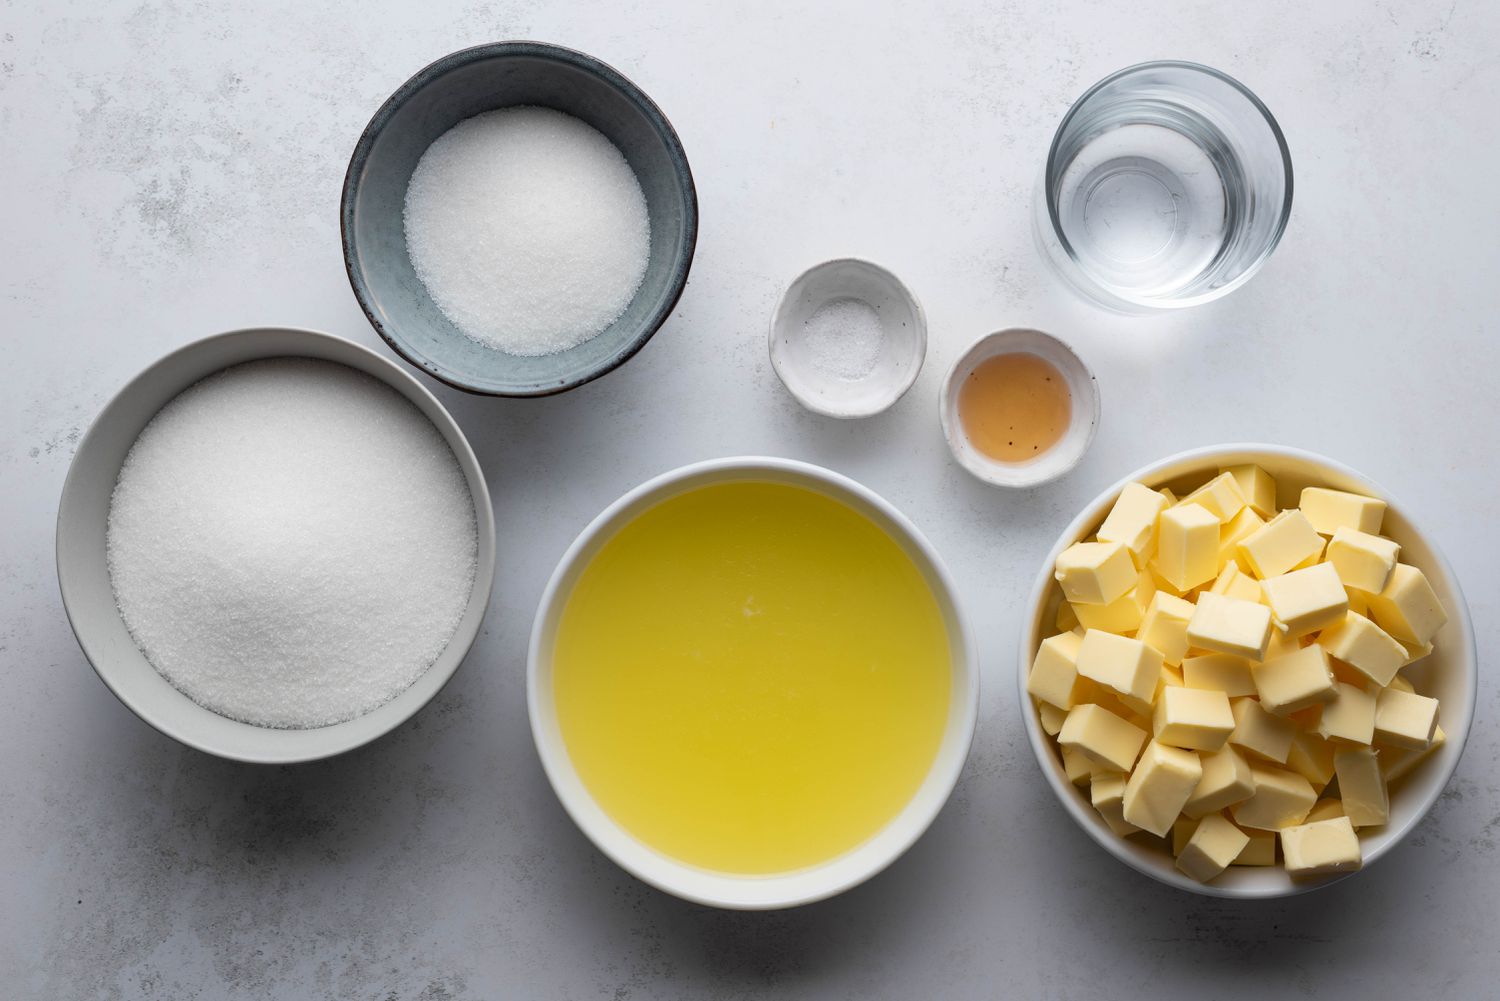 ingredients to make Italian buttercream